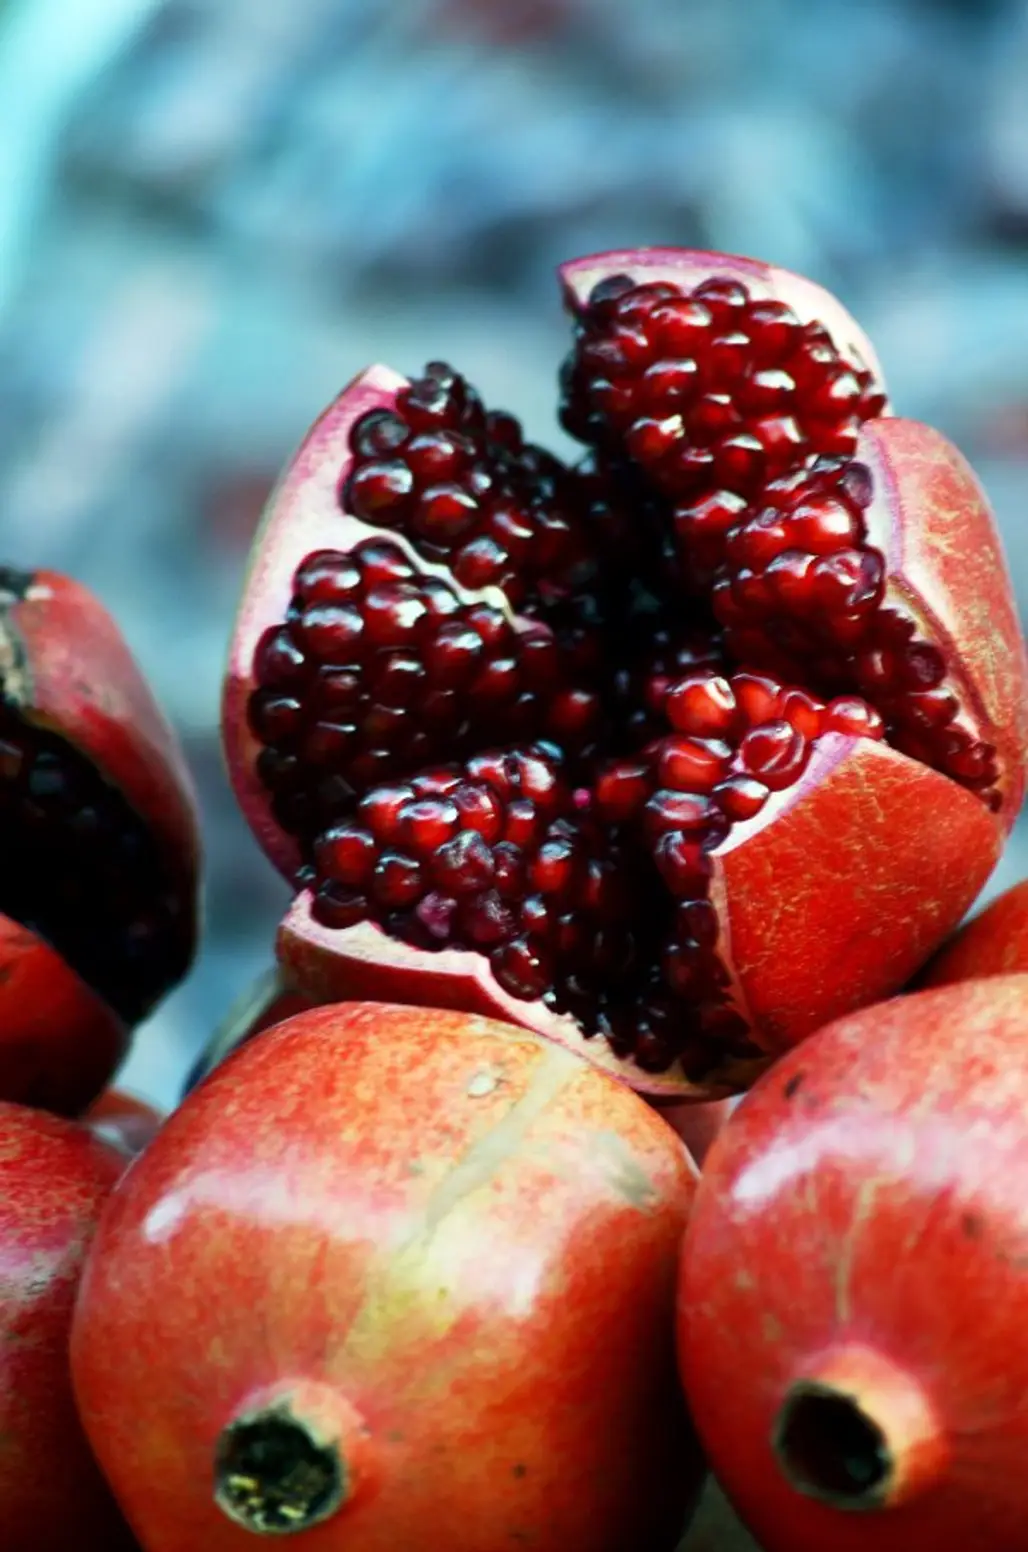 Buy Plenty of Pomegranates to Celebrate like Turkey